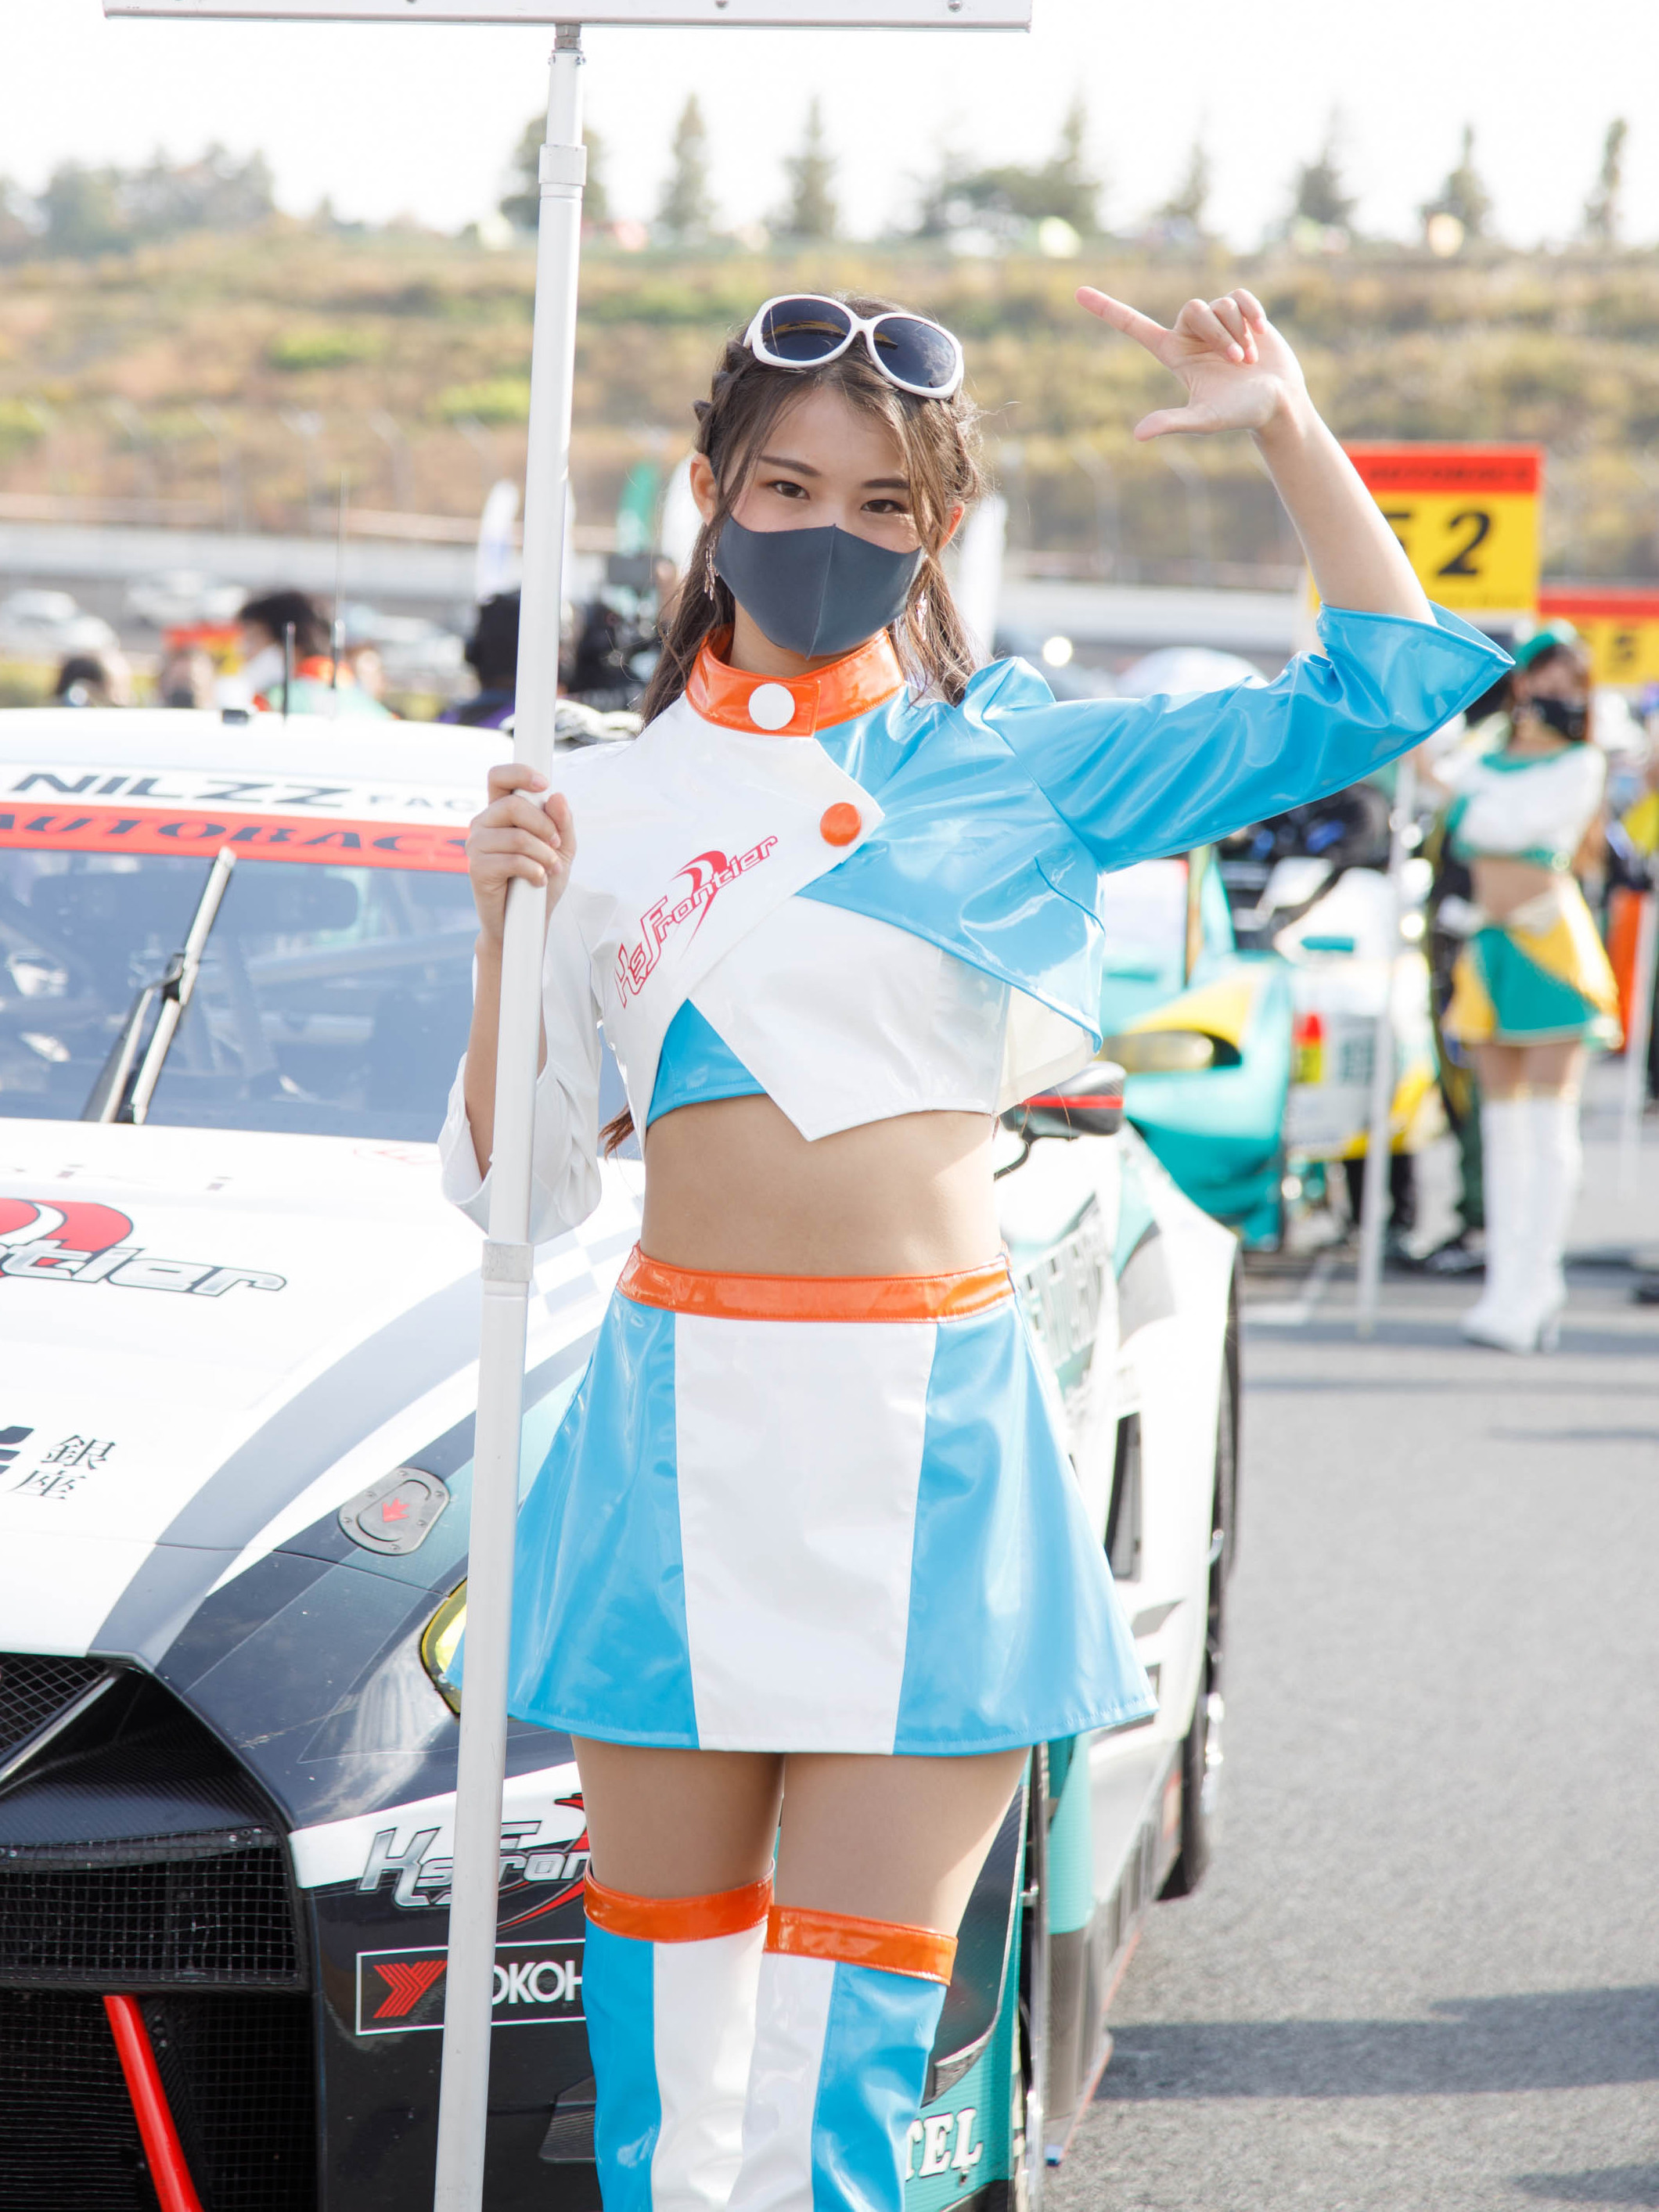 【No.48】NILZZ Racing藤高つばさ（フロンティアキューティーズ）photo by Igarashi KazuhiroフォトギャラリーGT500編はこちら＞＞